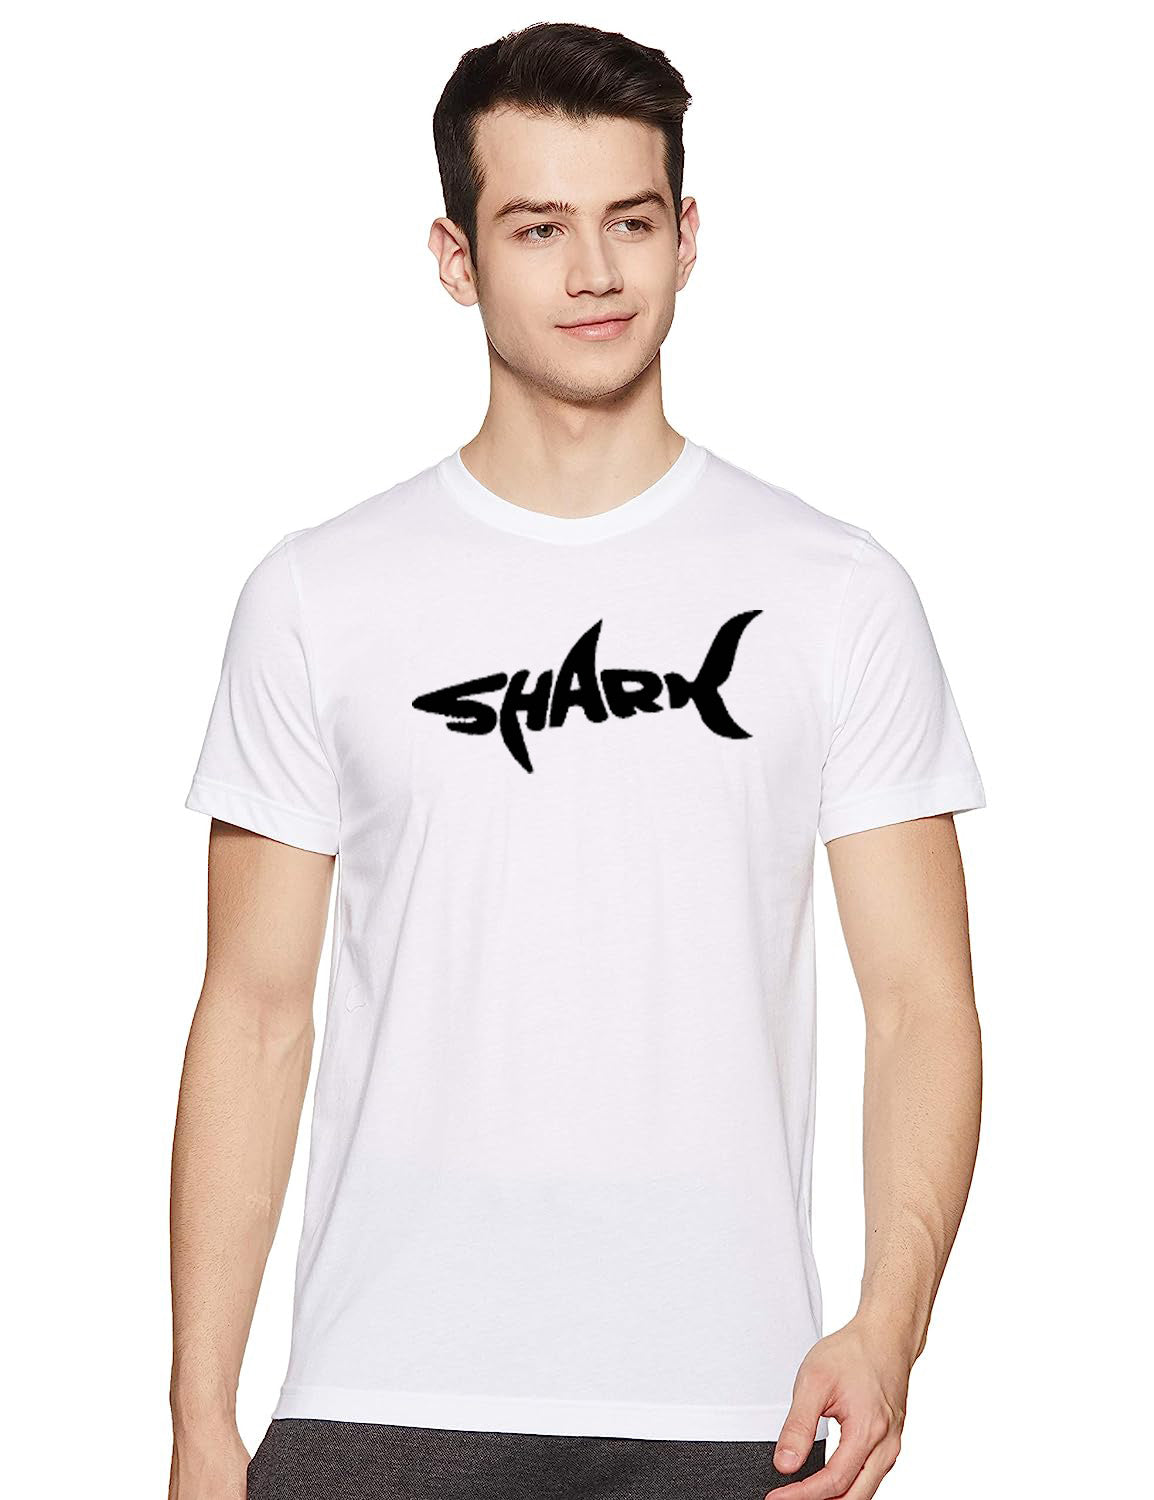 TheStyleO Cotton Half Sleeve Shark Tees| T-Shirt